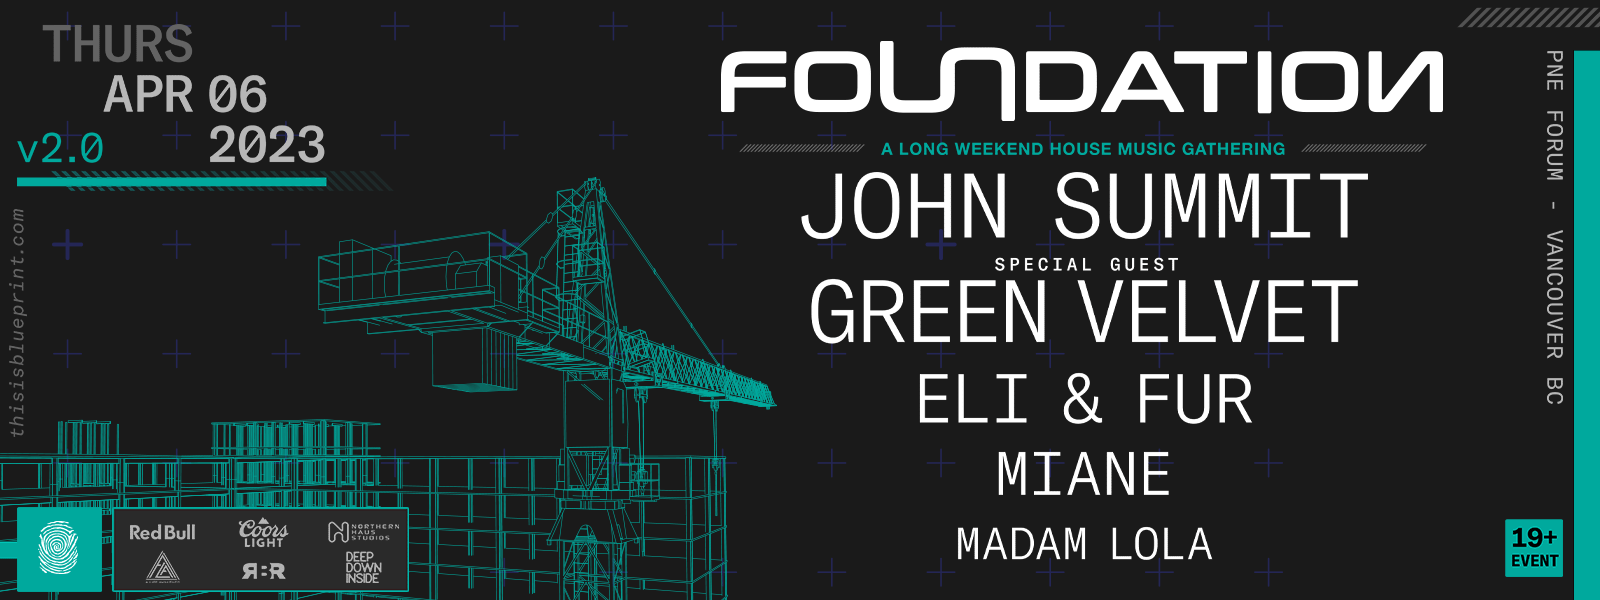 Foundation Presents: John Summit, Green Velvet , Eli & Fur, Miane and Madam Lola  